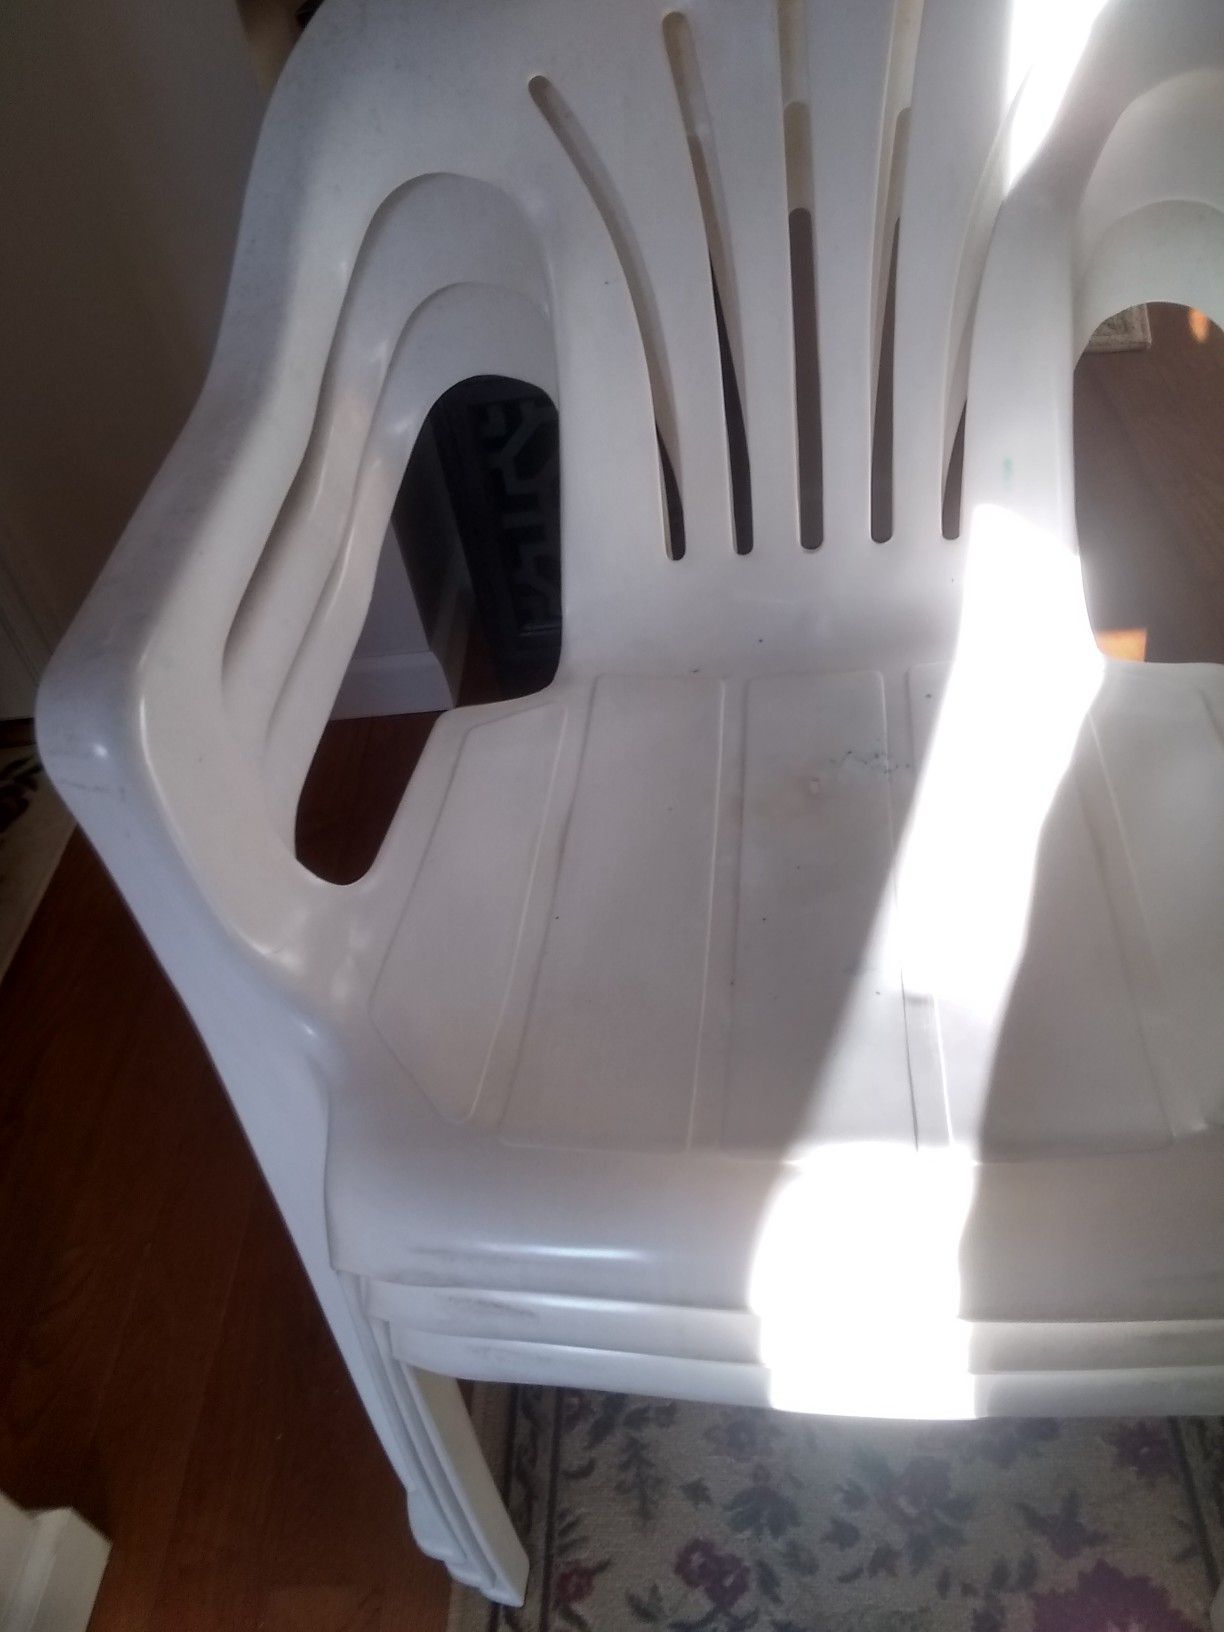 4 white plastic chairs